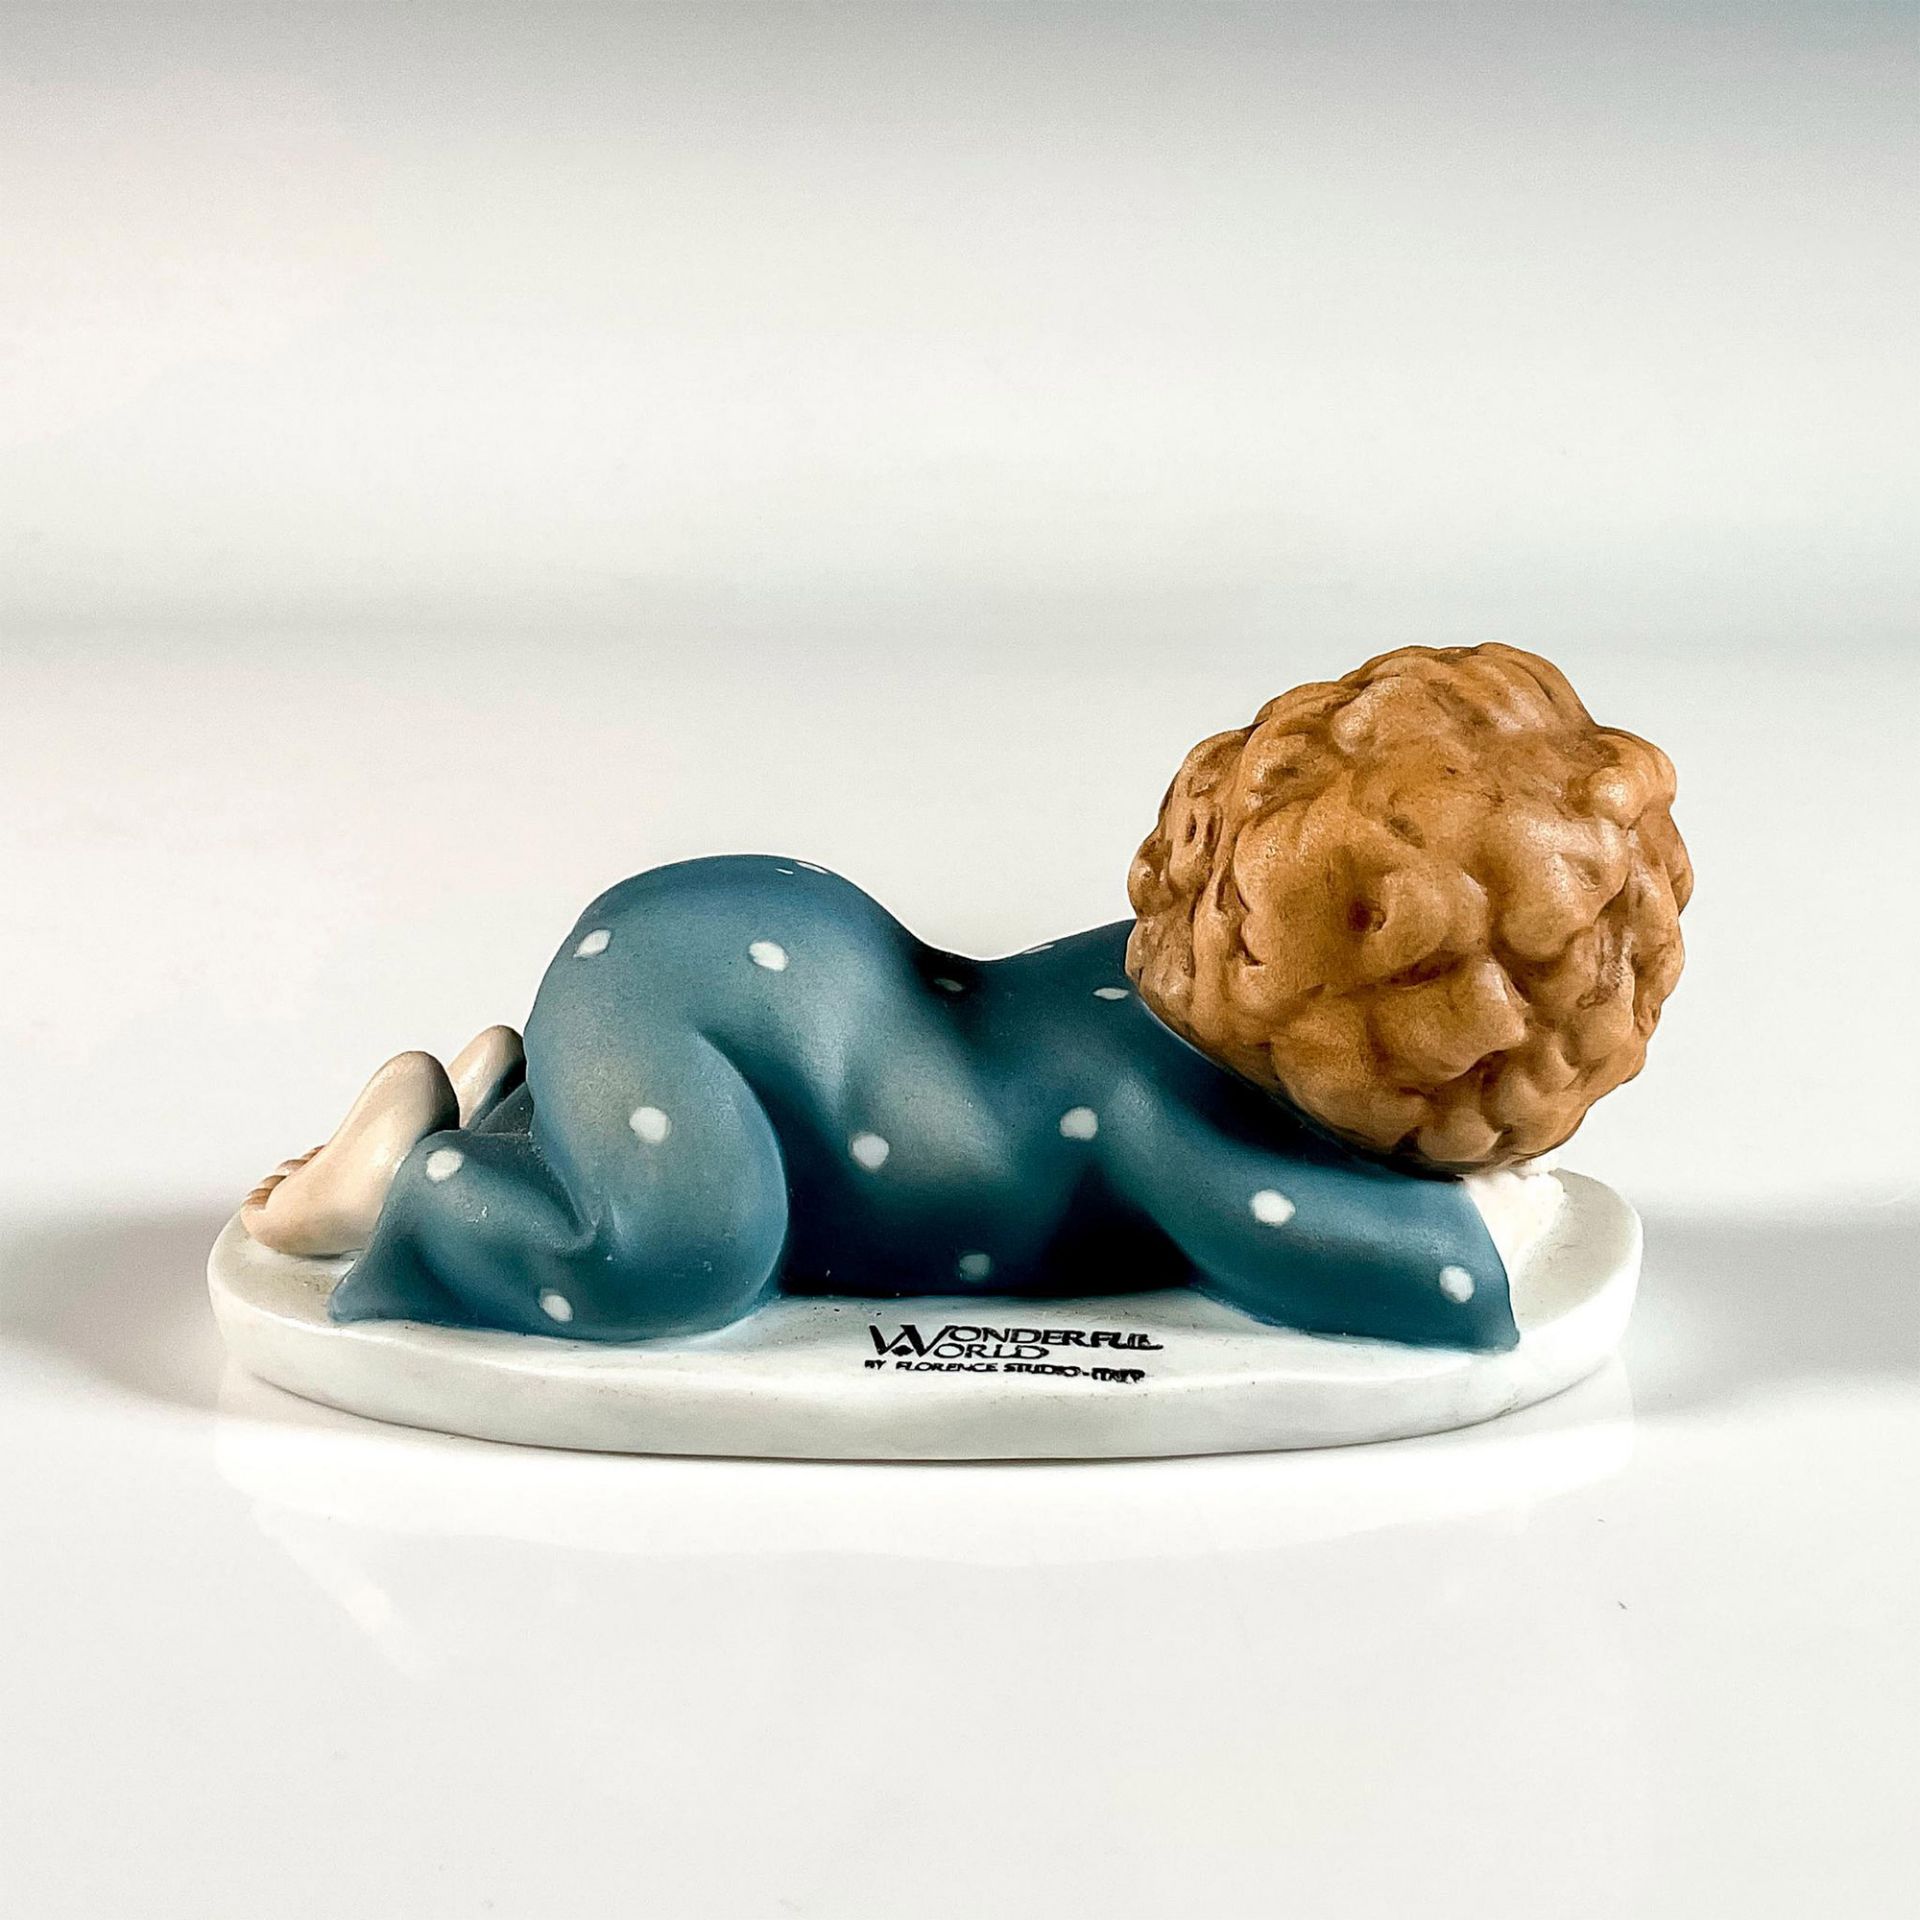 Florence Giuseppe Armani Figurine, Sleeping Baby - Image 2 of 3